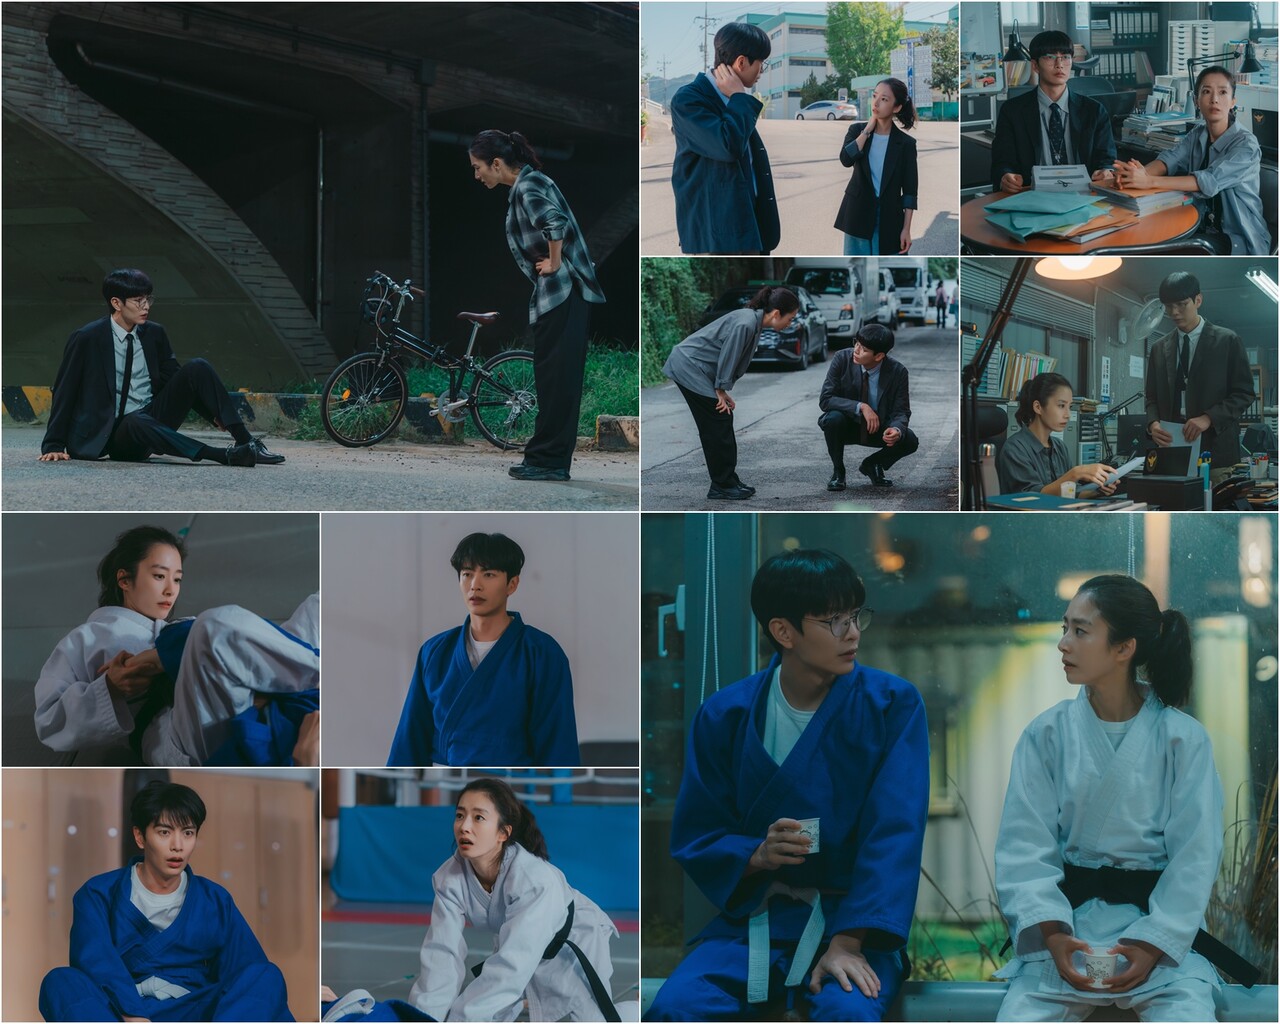 Lee Min Ki And Kwak Sun Young Showcase An Ideal Senior-Junior Relationship In Upcoming Drama “Crash”